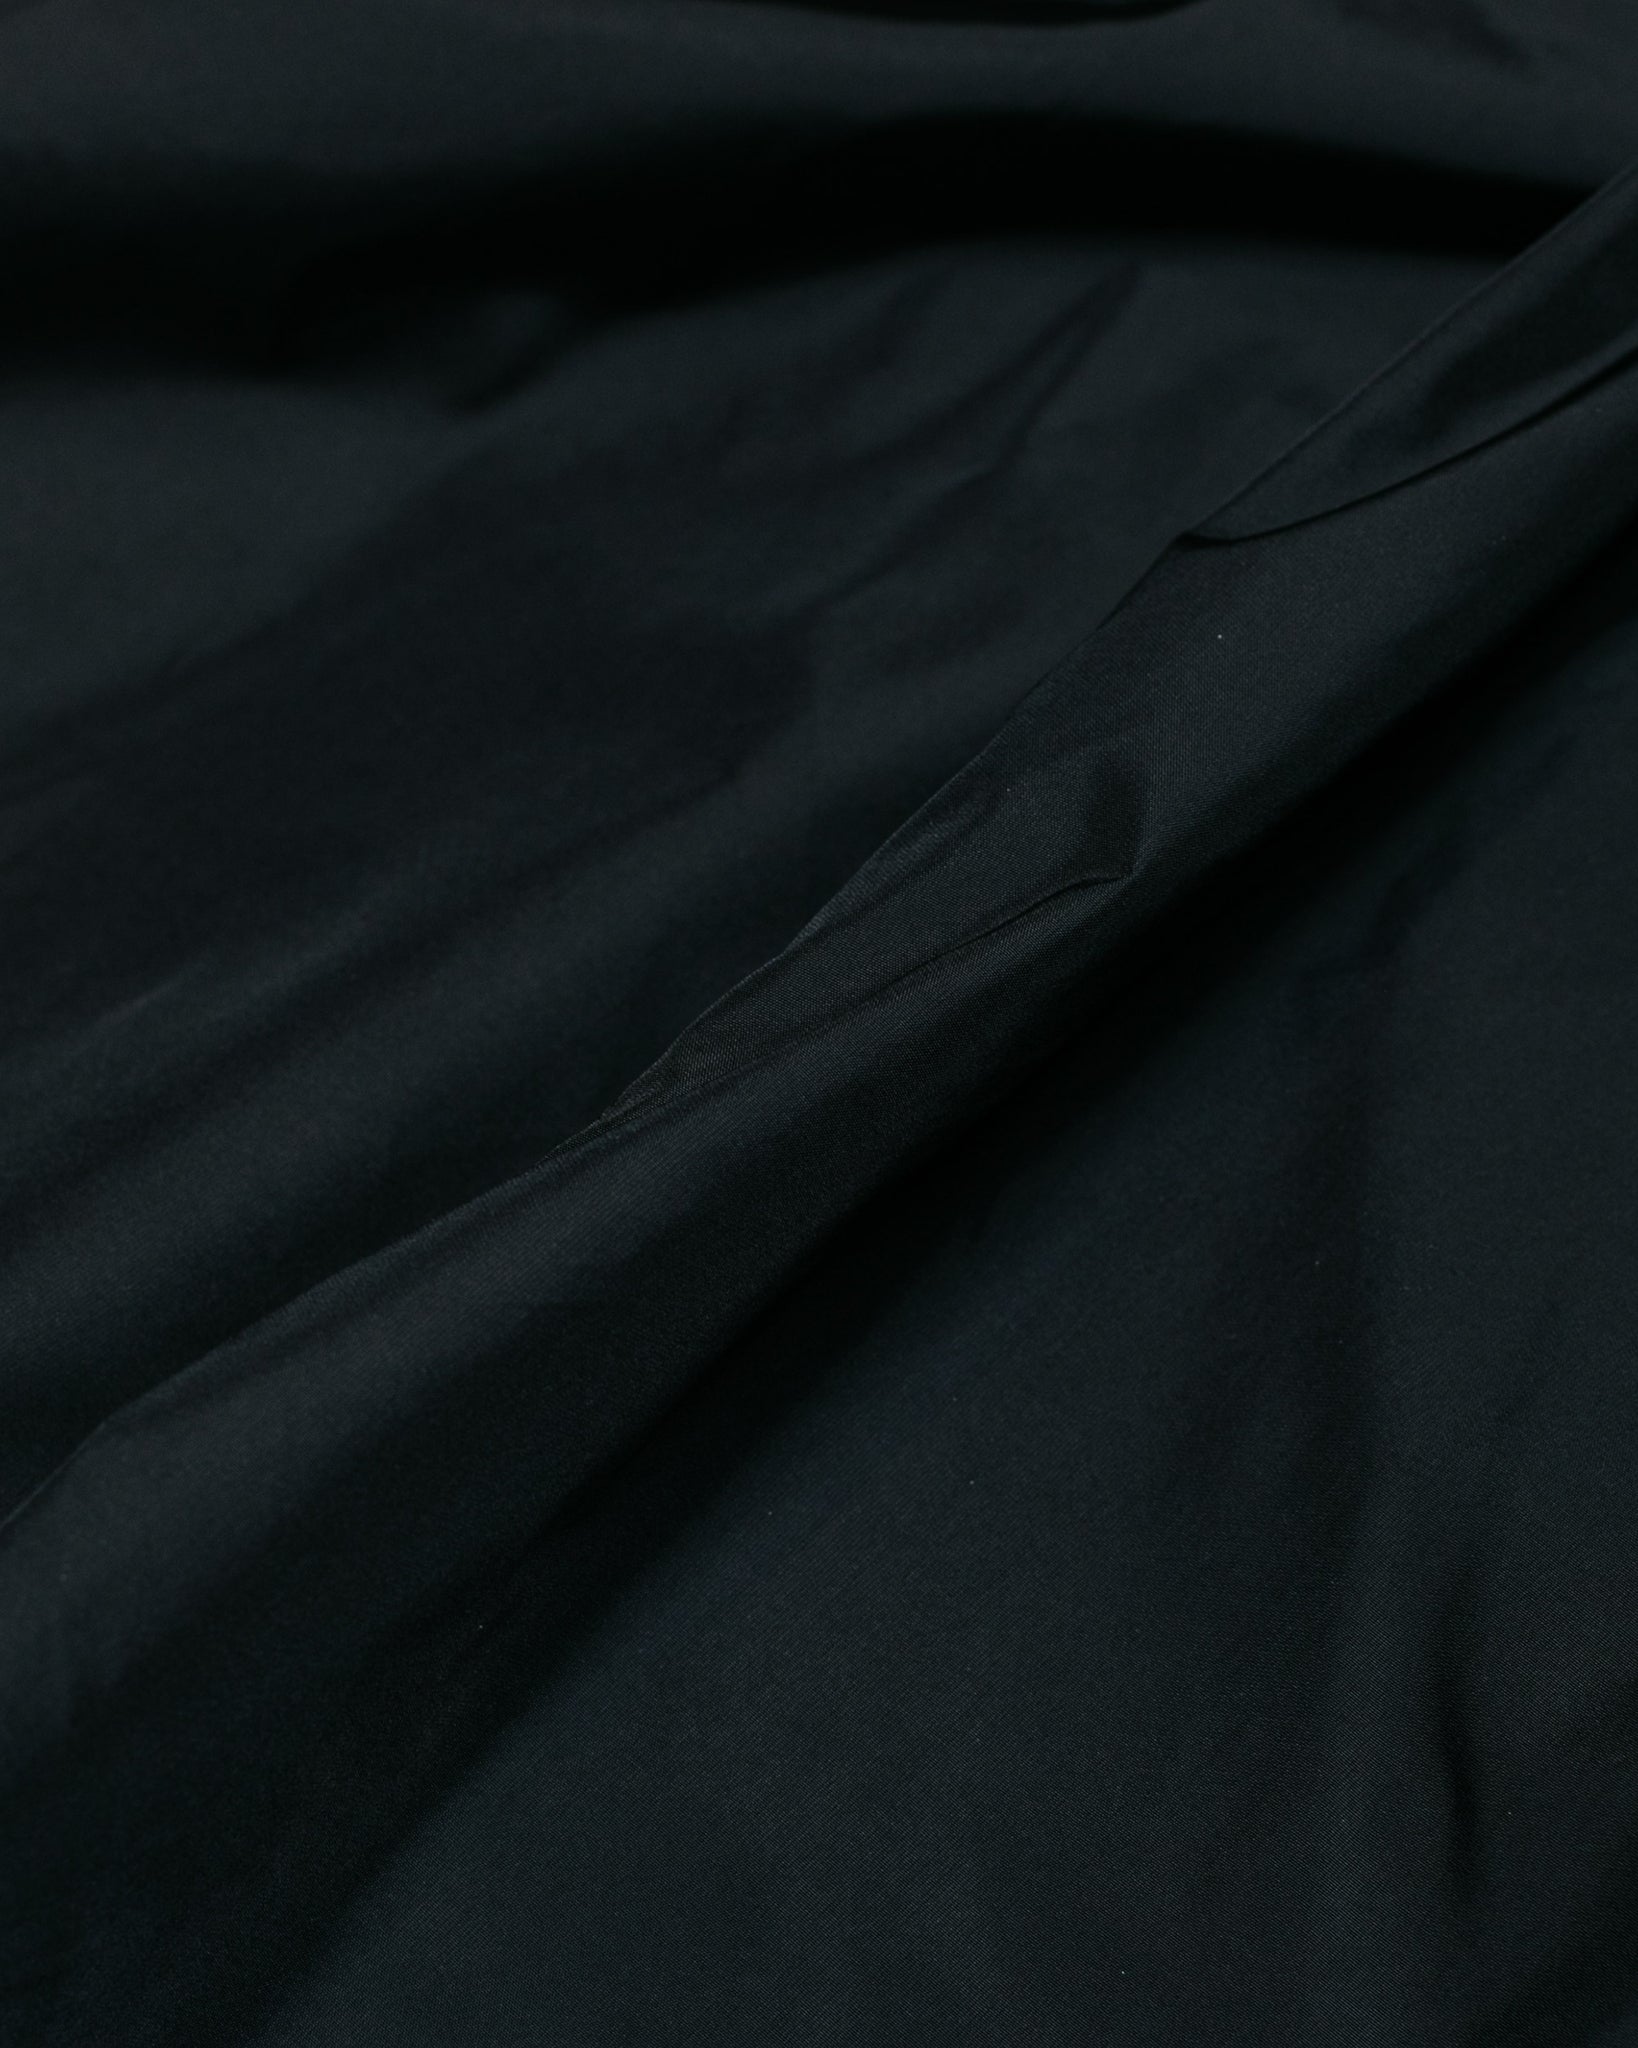 Our Legacy Drape Tech Trunks Black fabric